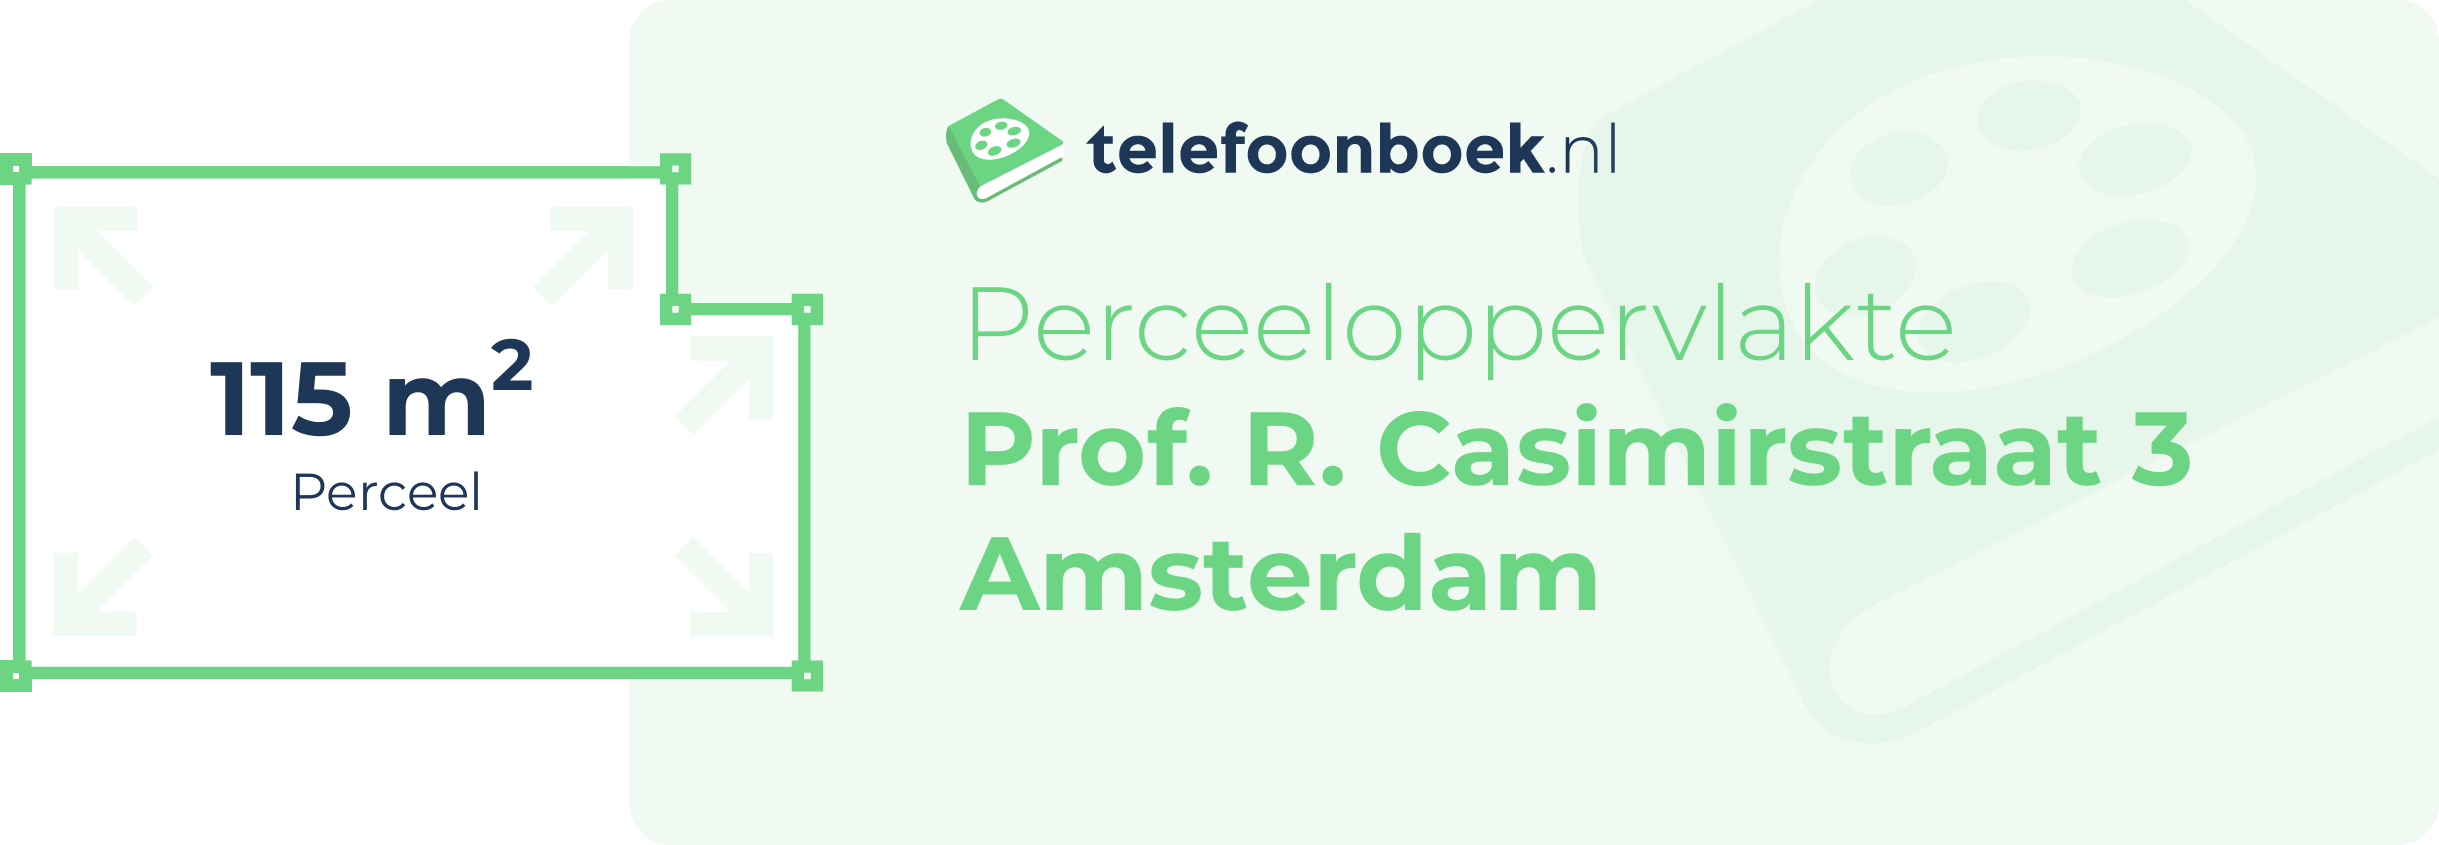 Perceeloppervlakte Prof. R. Casimirstraat 3 Amsterdam